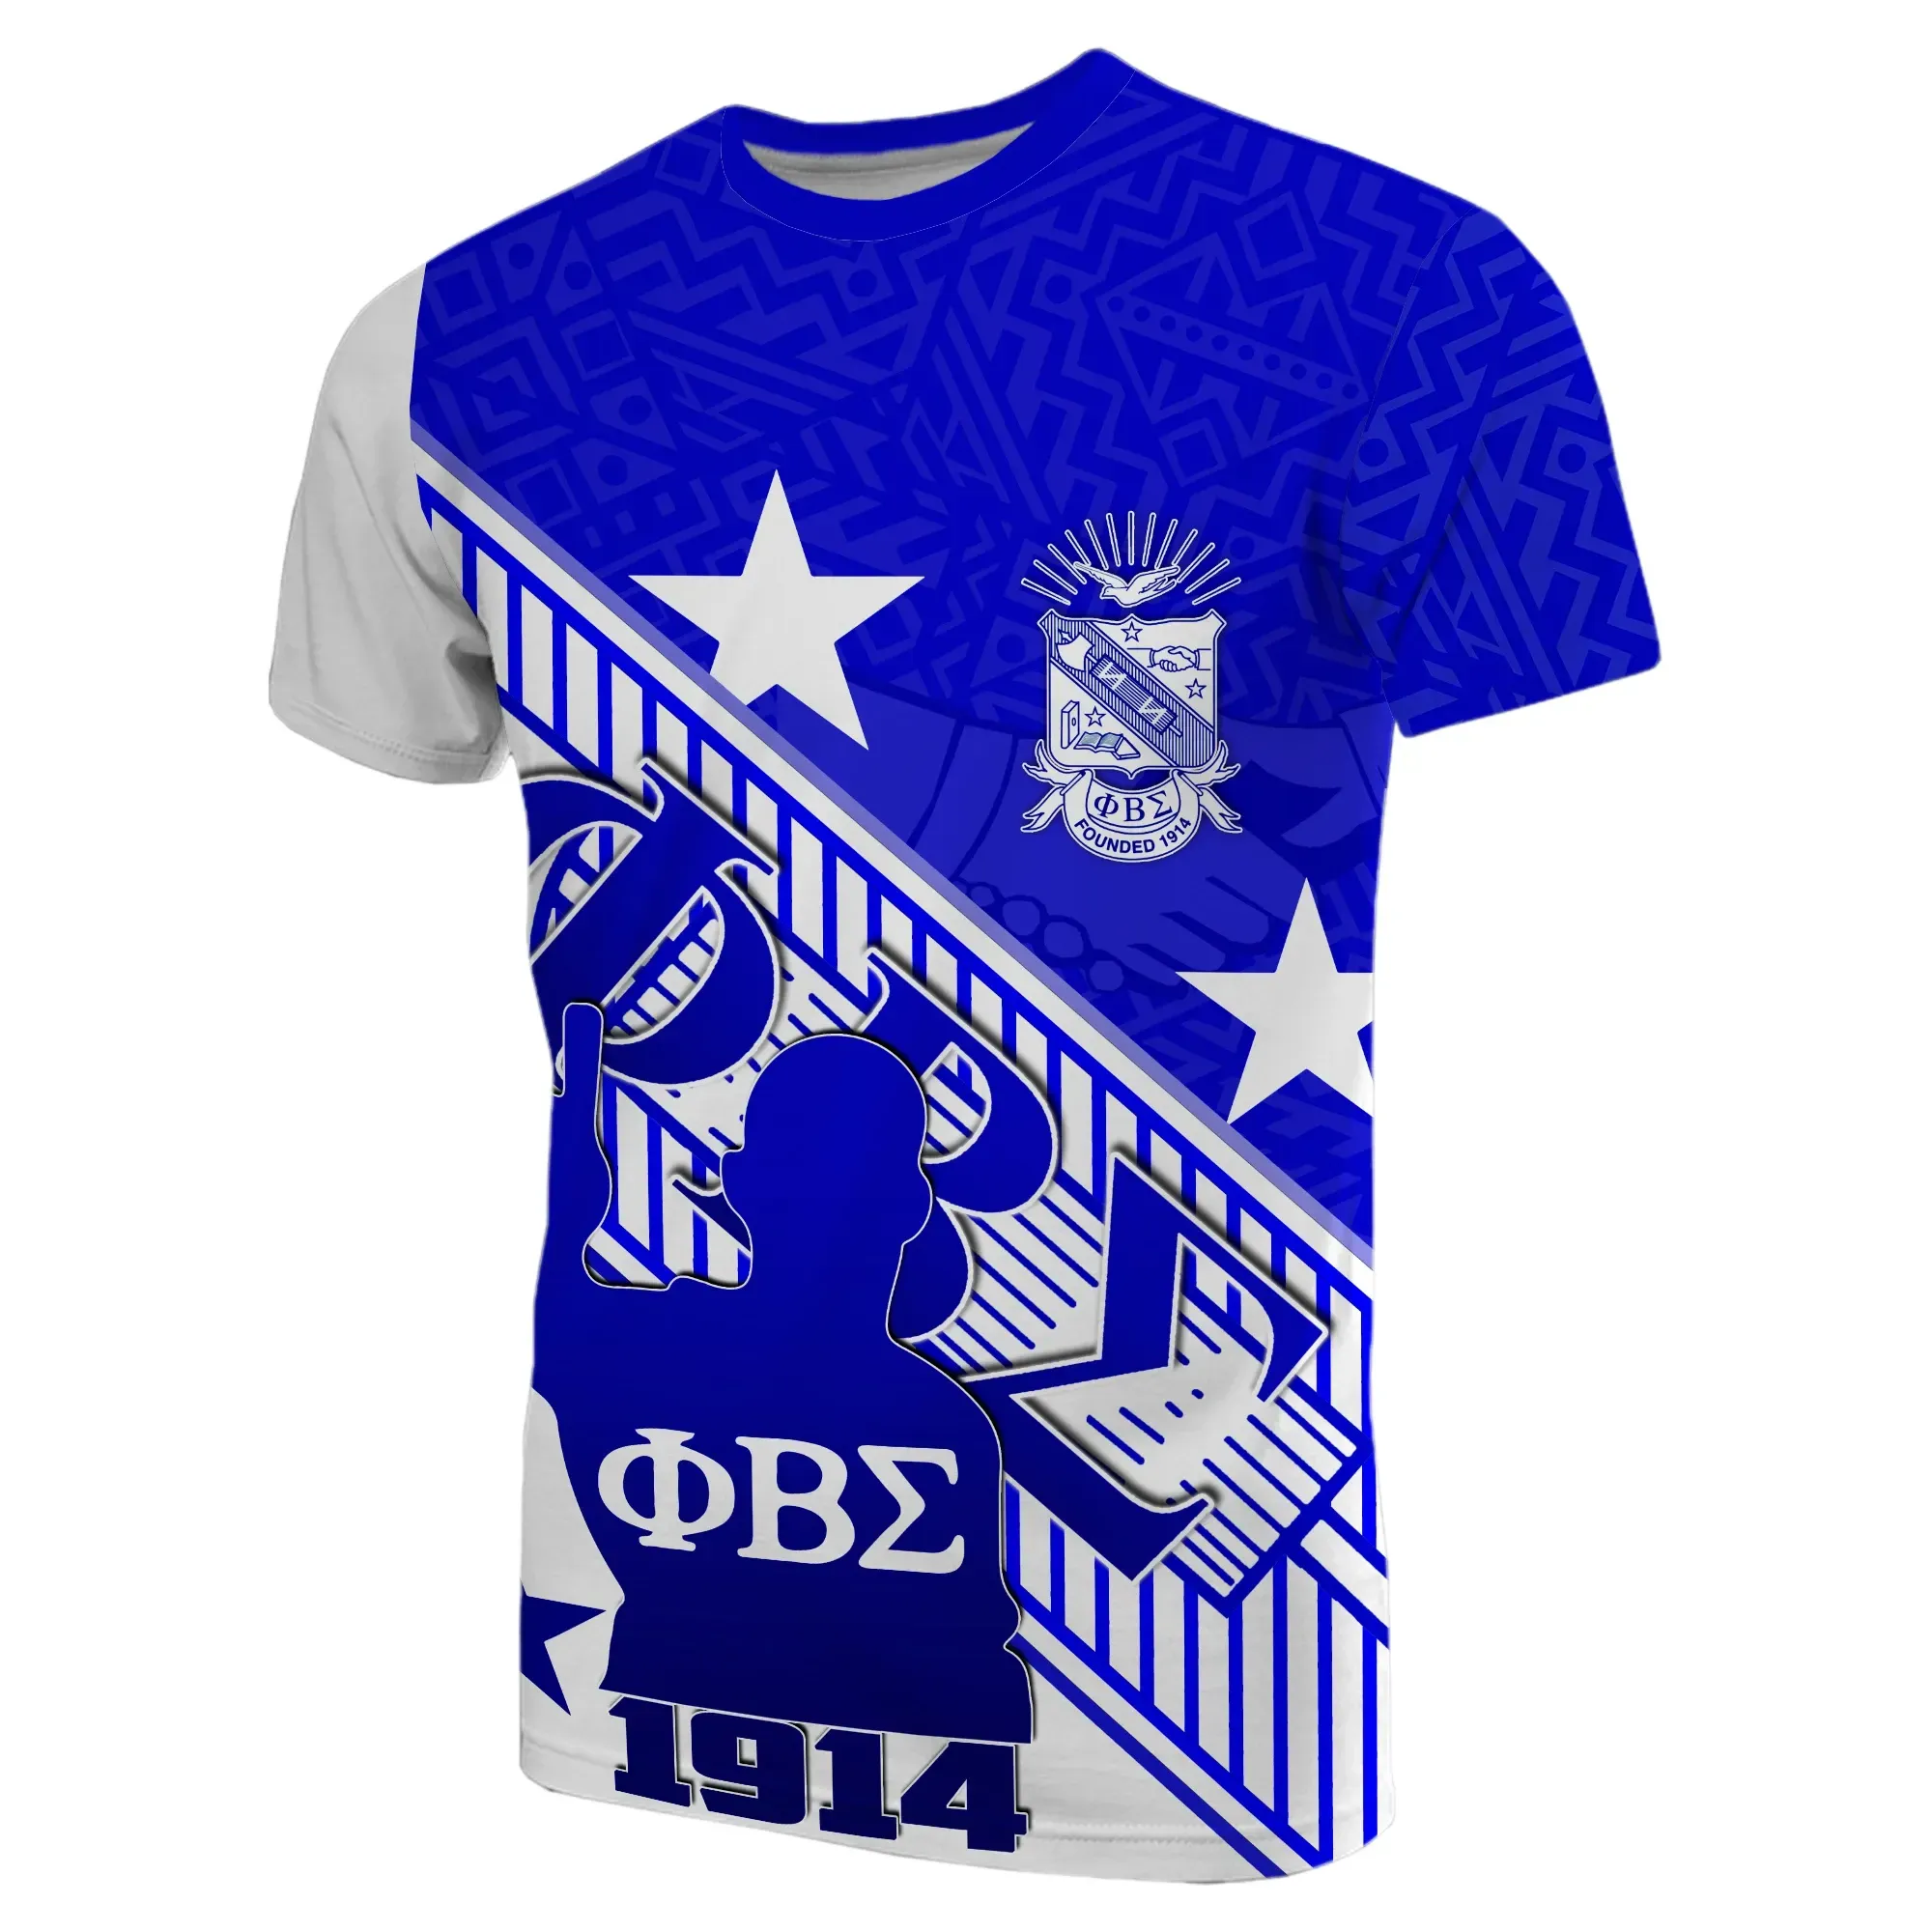 T-shirt – Spirit Brotherhood Phi Beta Sigma Tee